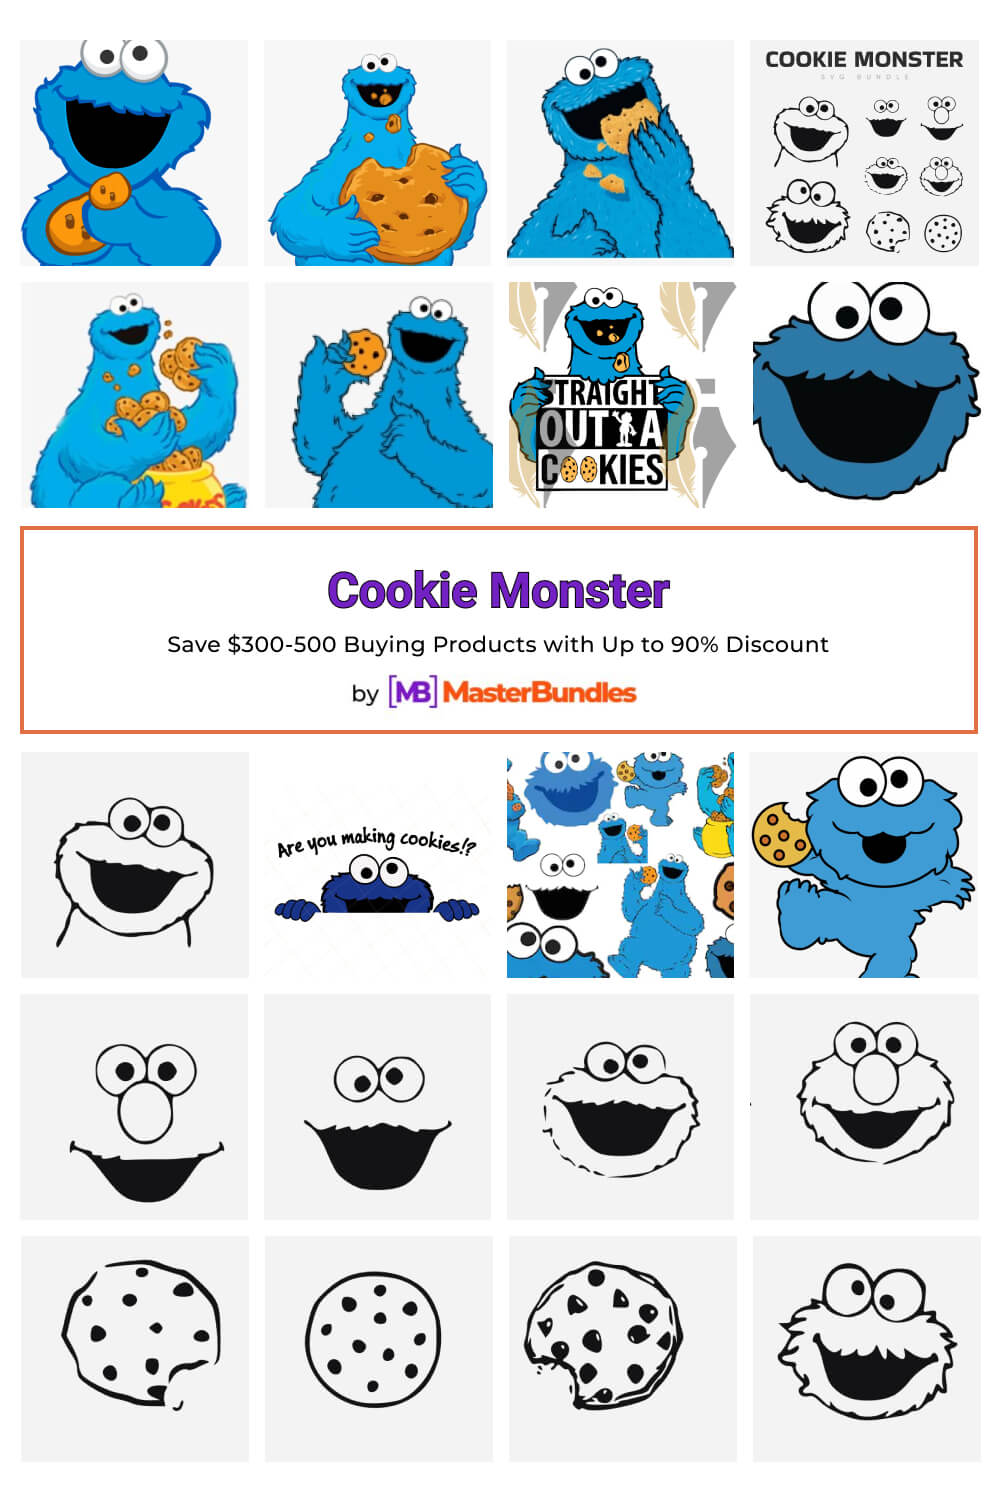 cookie monster pinterest image.